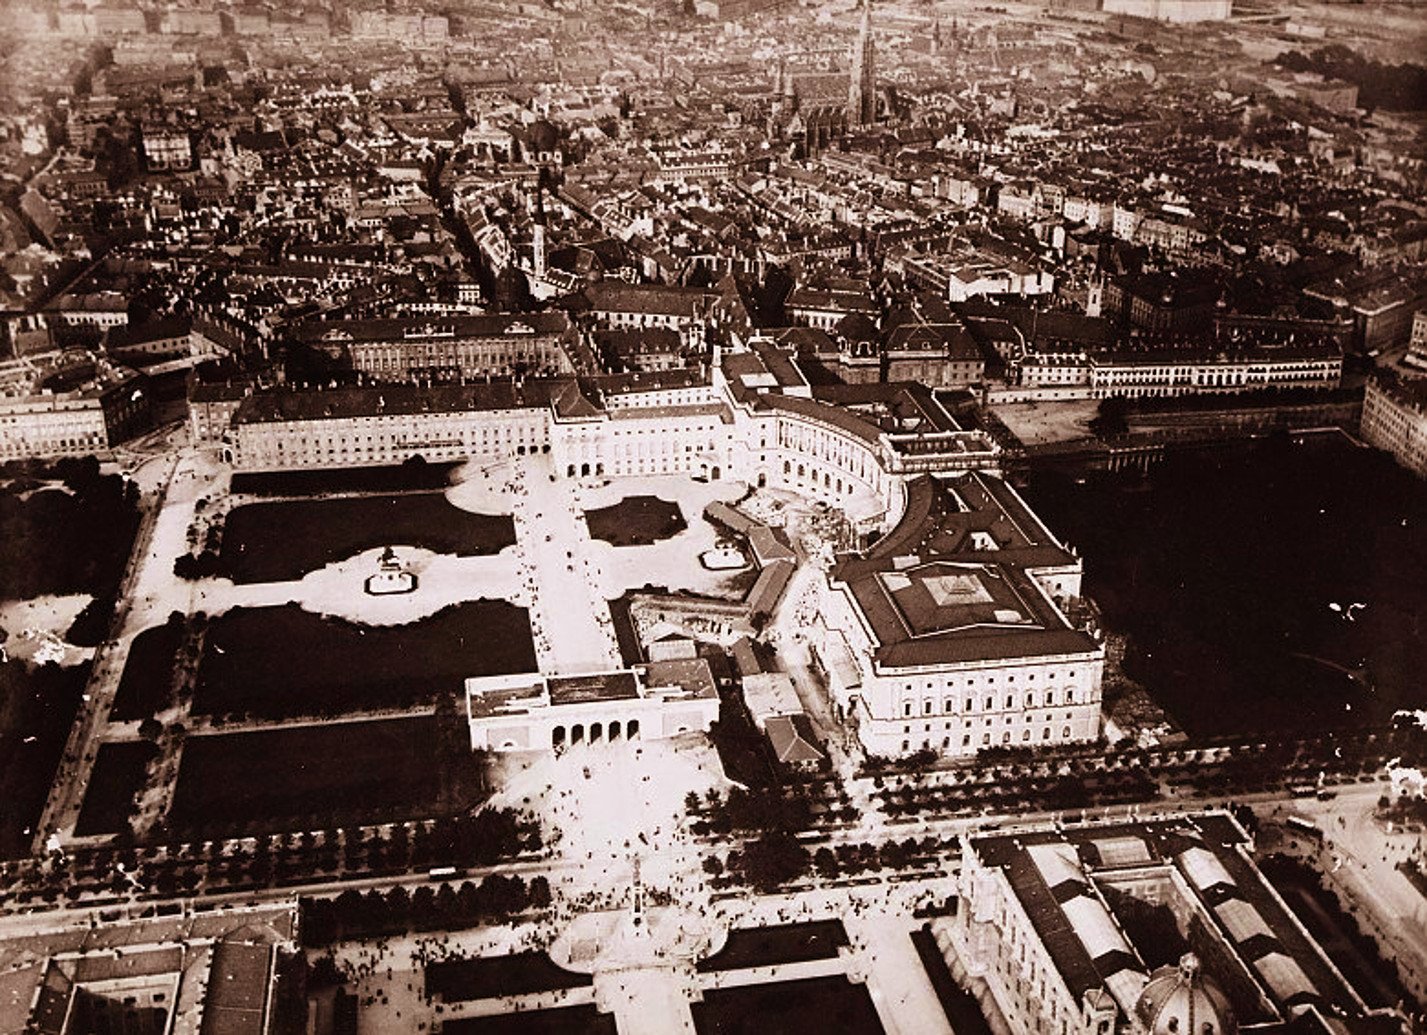 Photograph of Heldenplatz in Vienna taken from a hot-air balloon, c. 1900.jpg